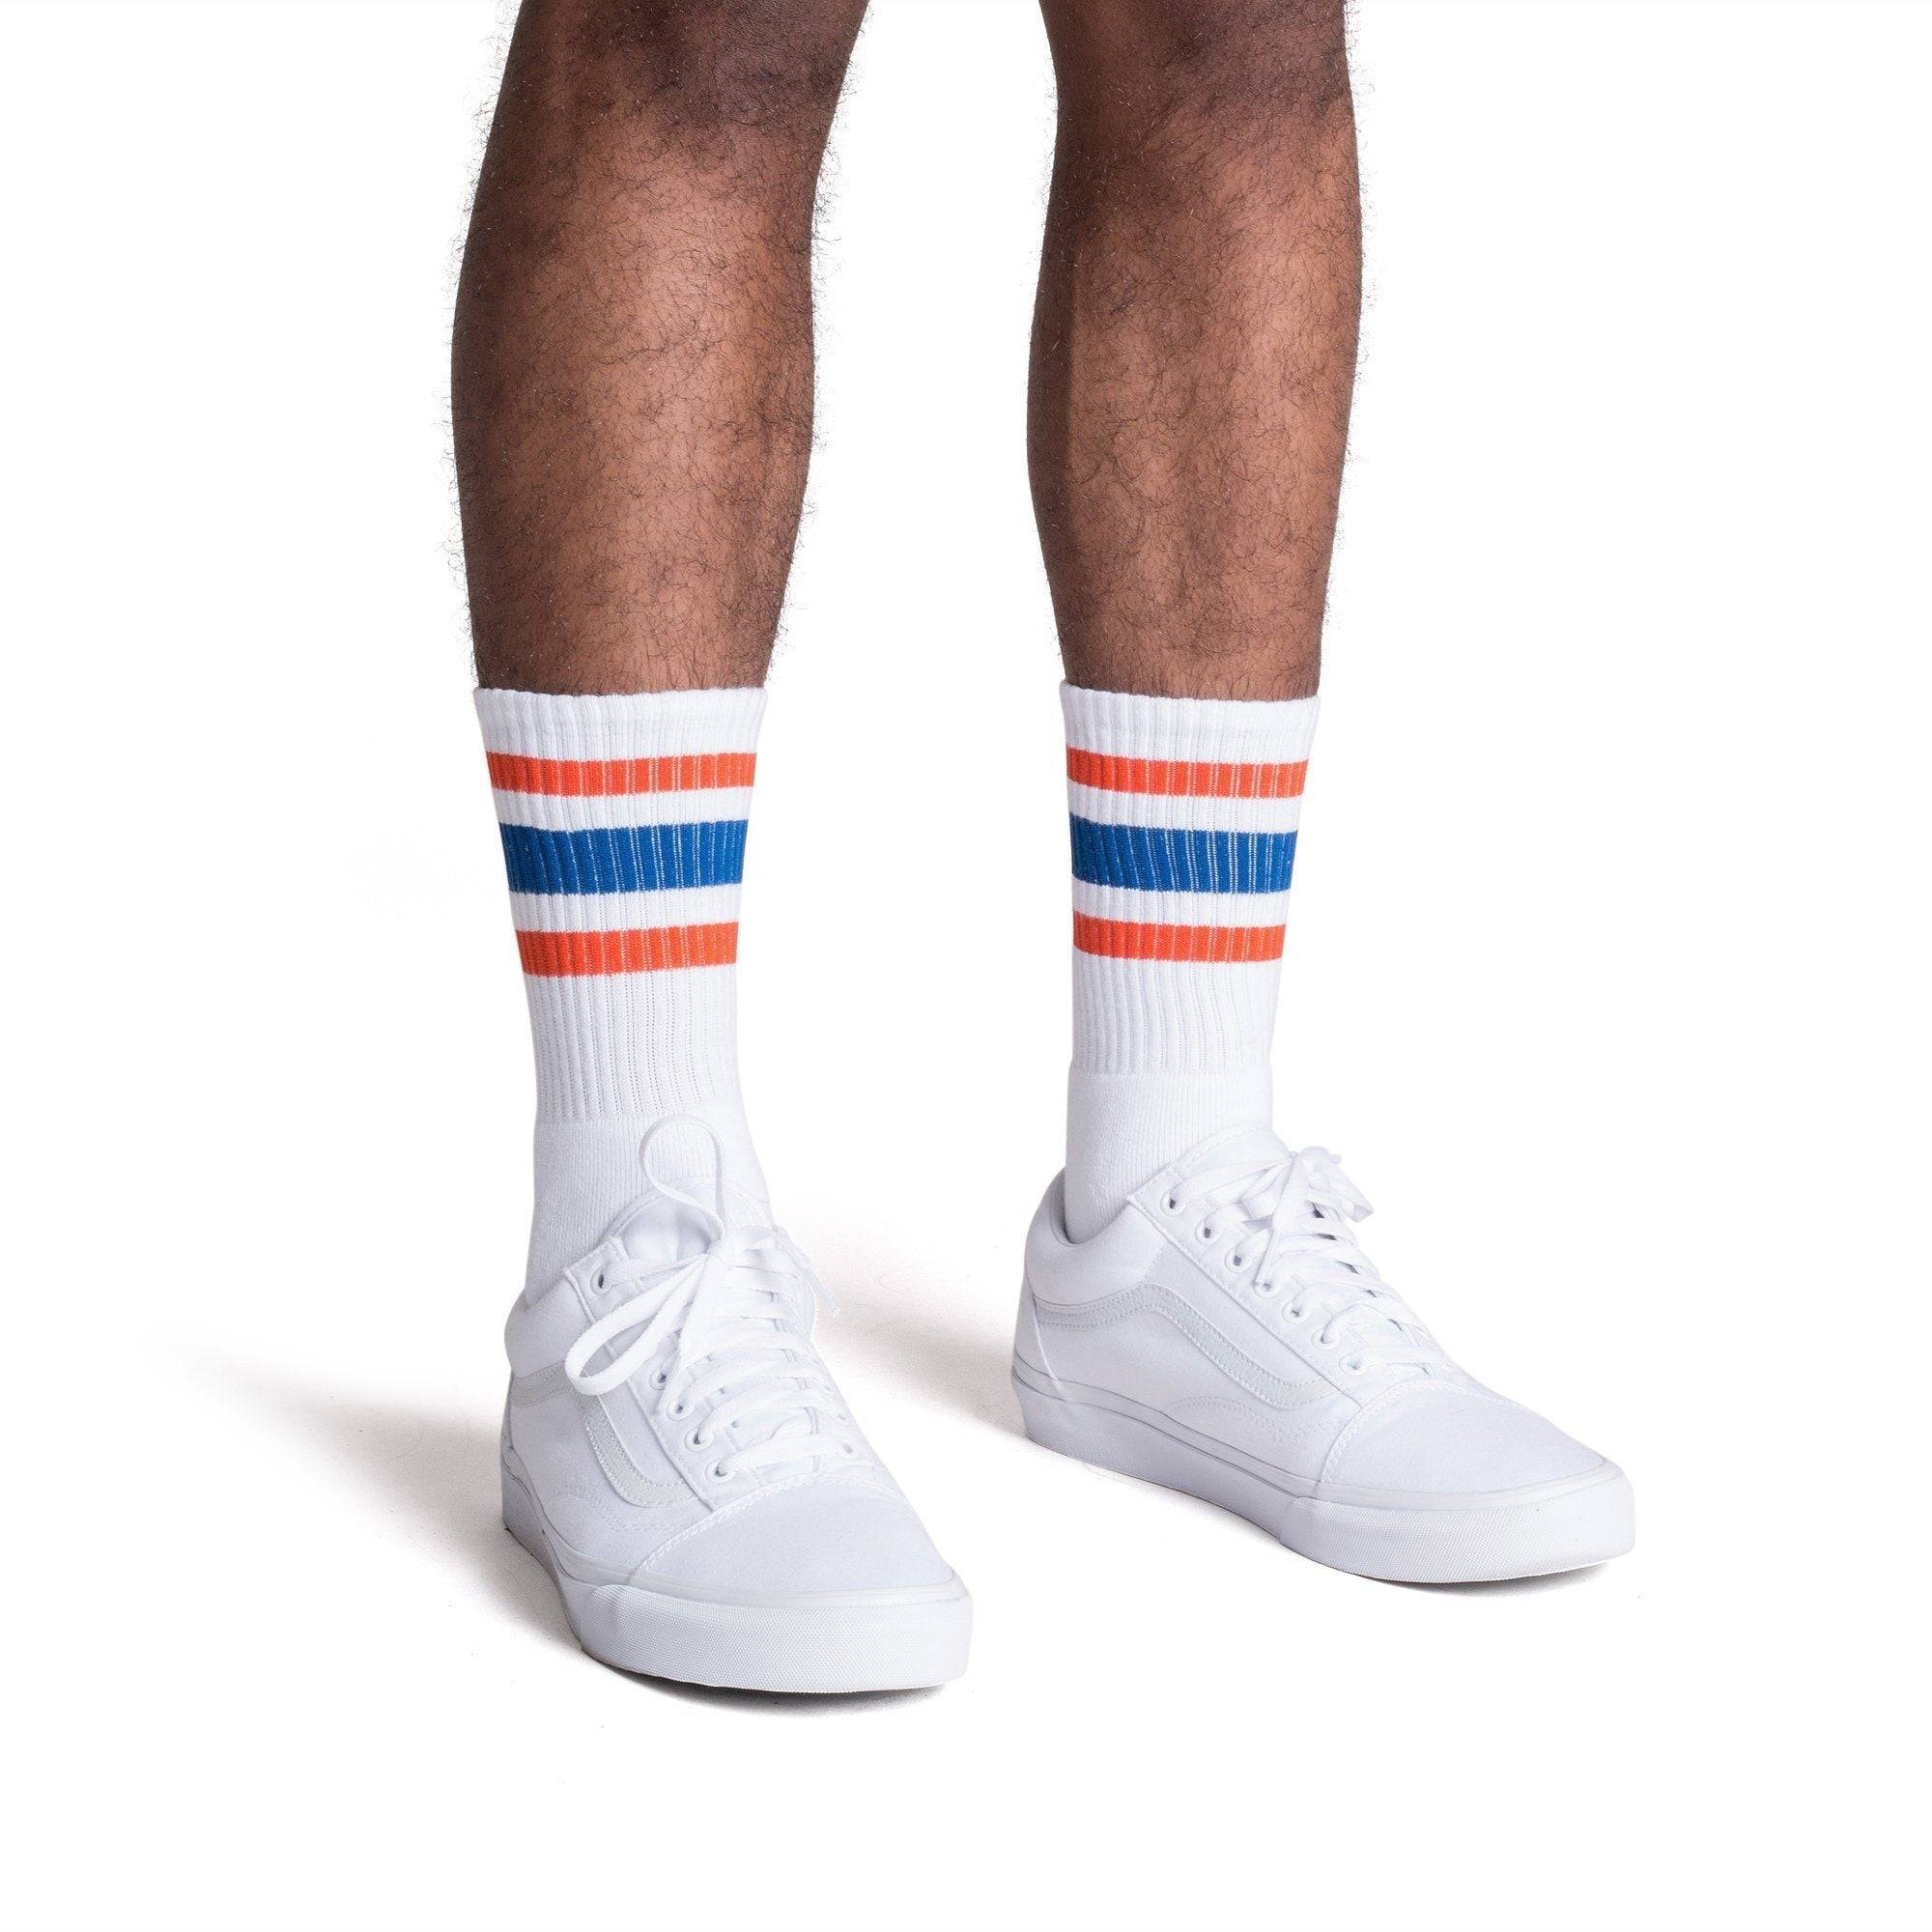 Men's Navy Blue and Orange Striped Socks